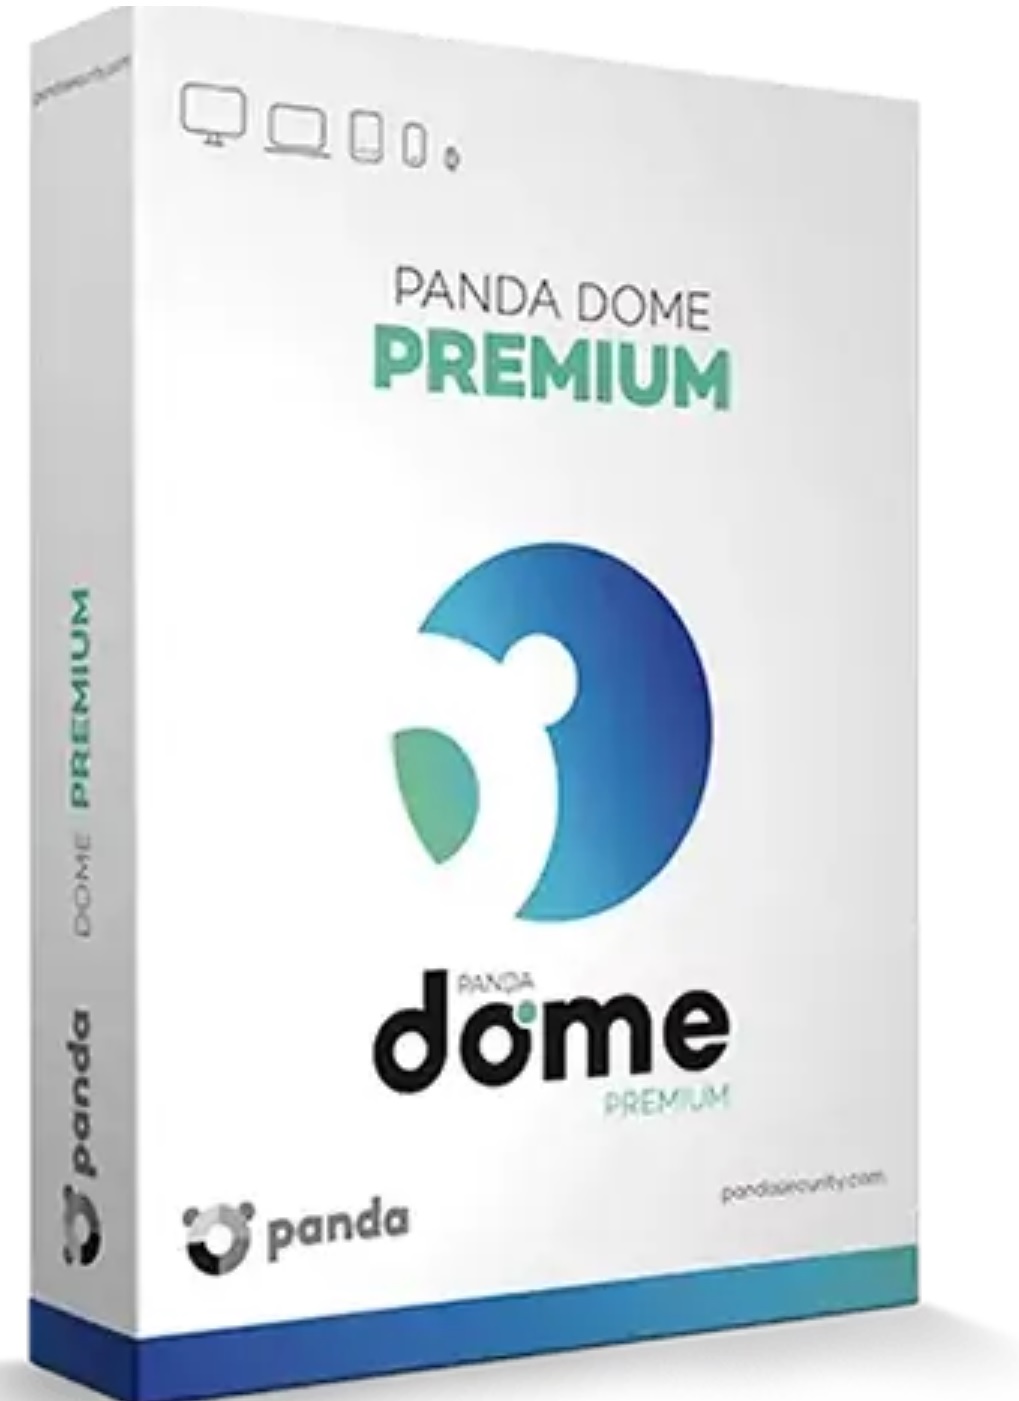 Panda DOME Premium 1 Years 1 Devices key